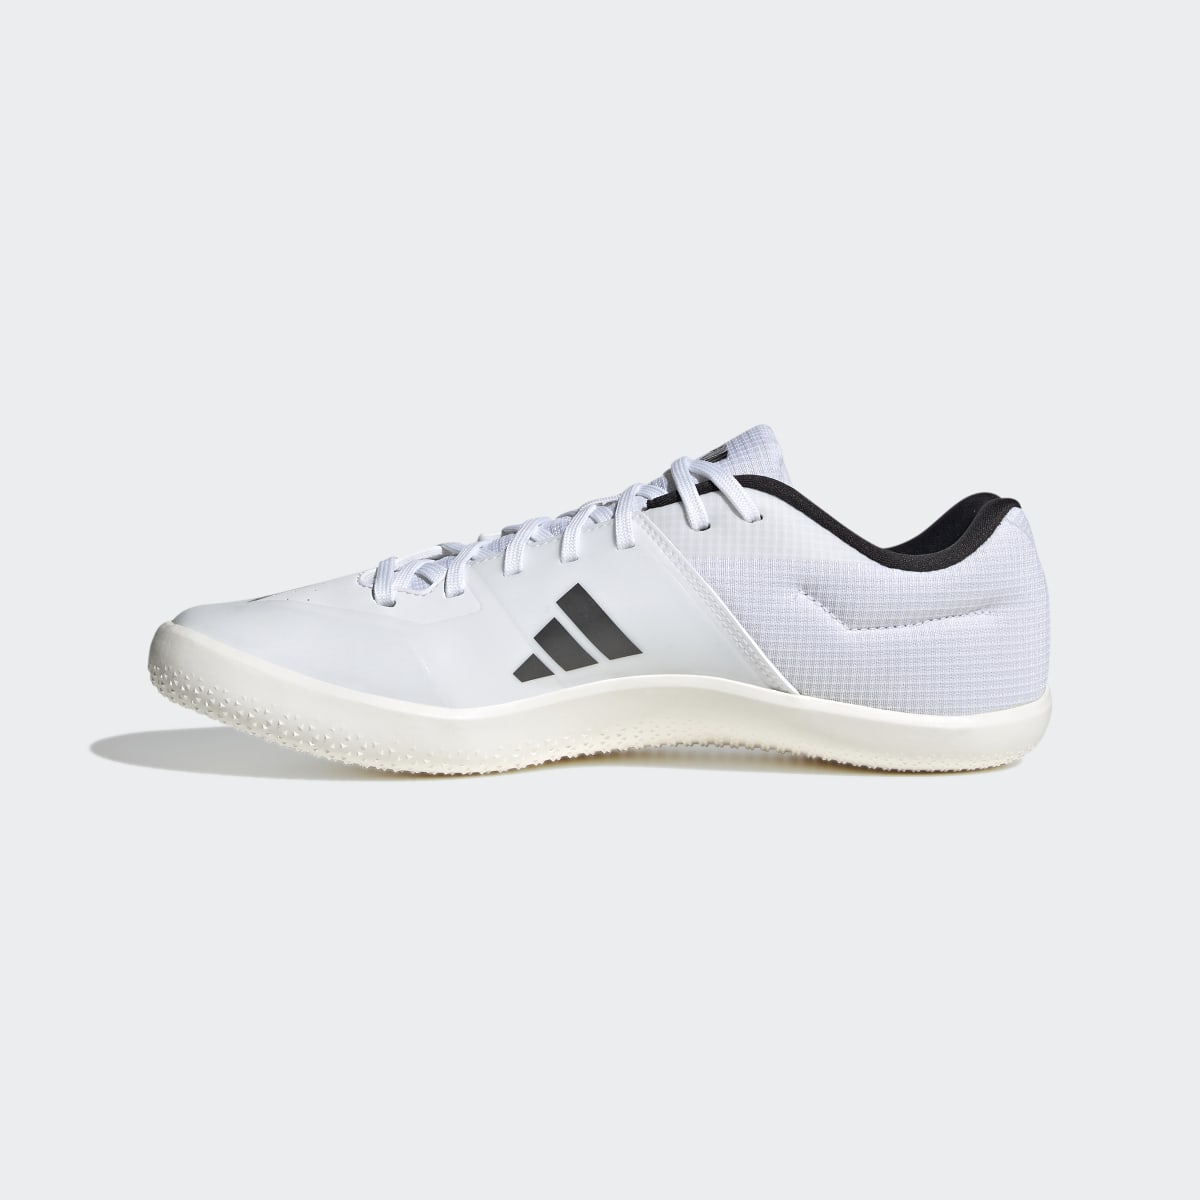 Adidas Throwstar Shoes. 7